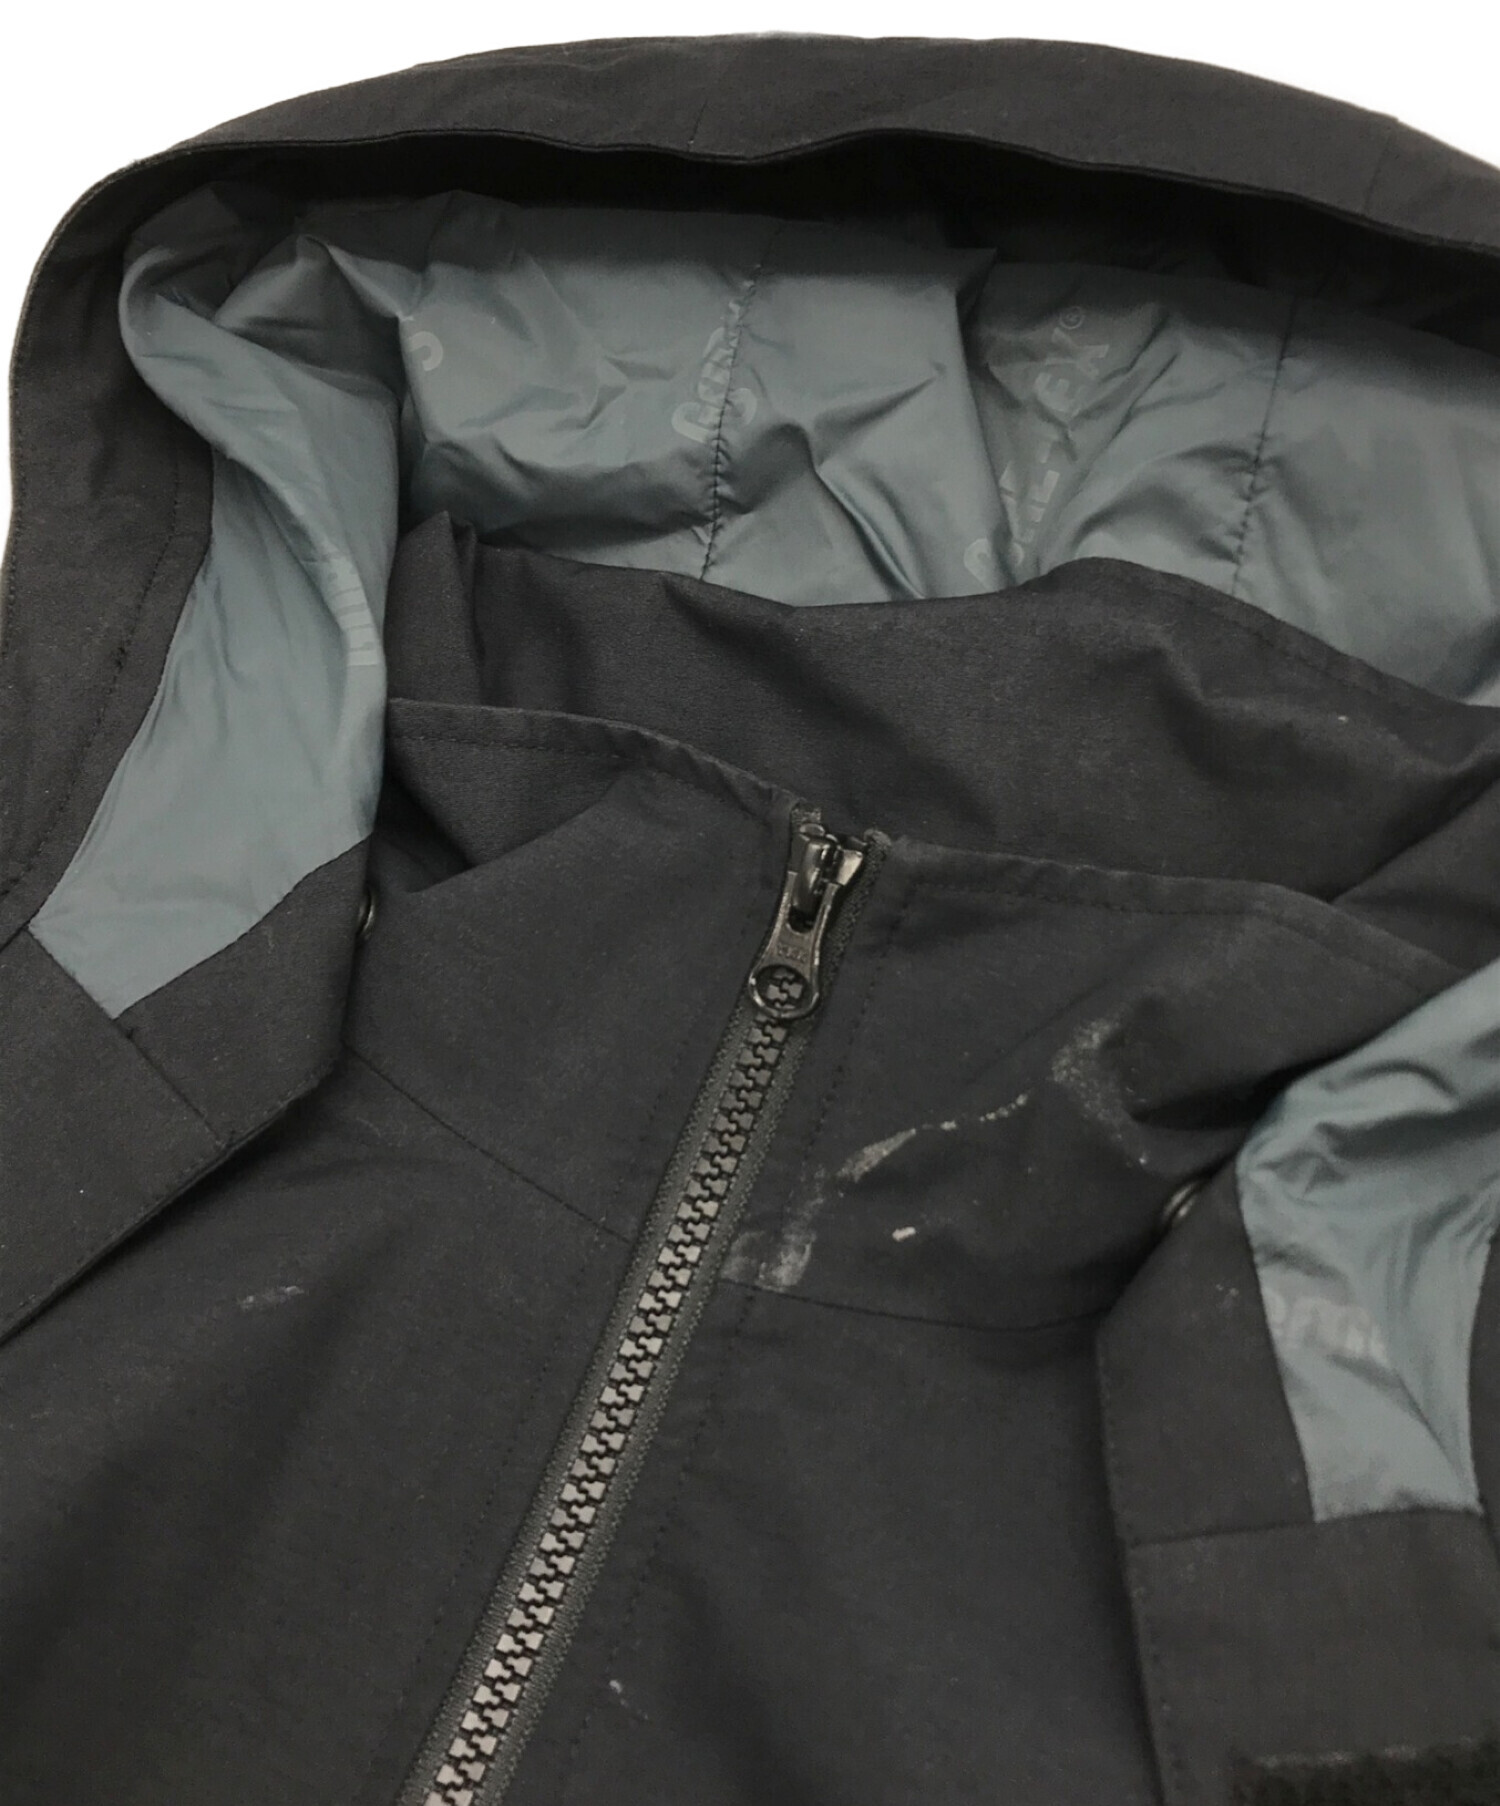 SUPREME (シュプリーム) GORE-TEX Court Jacket ブラック サイズ:M